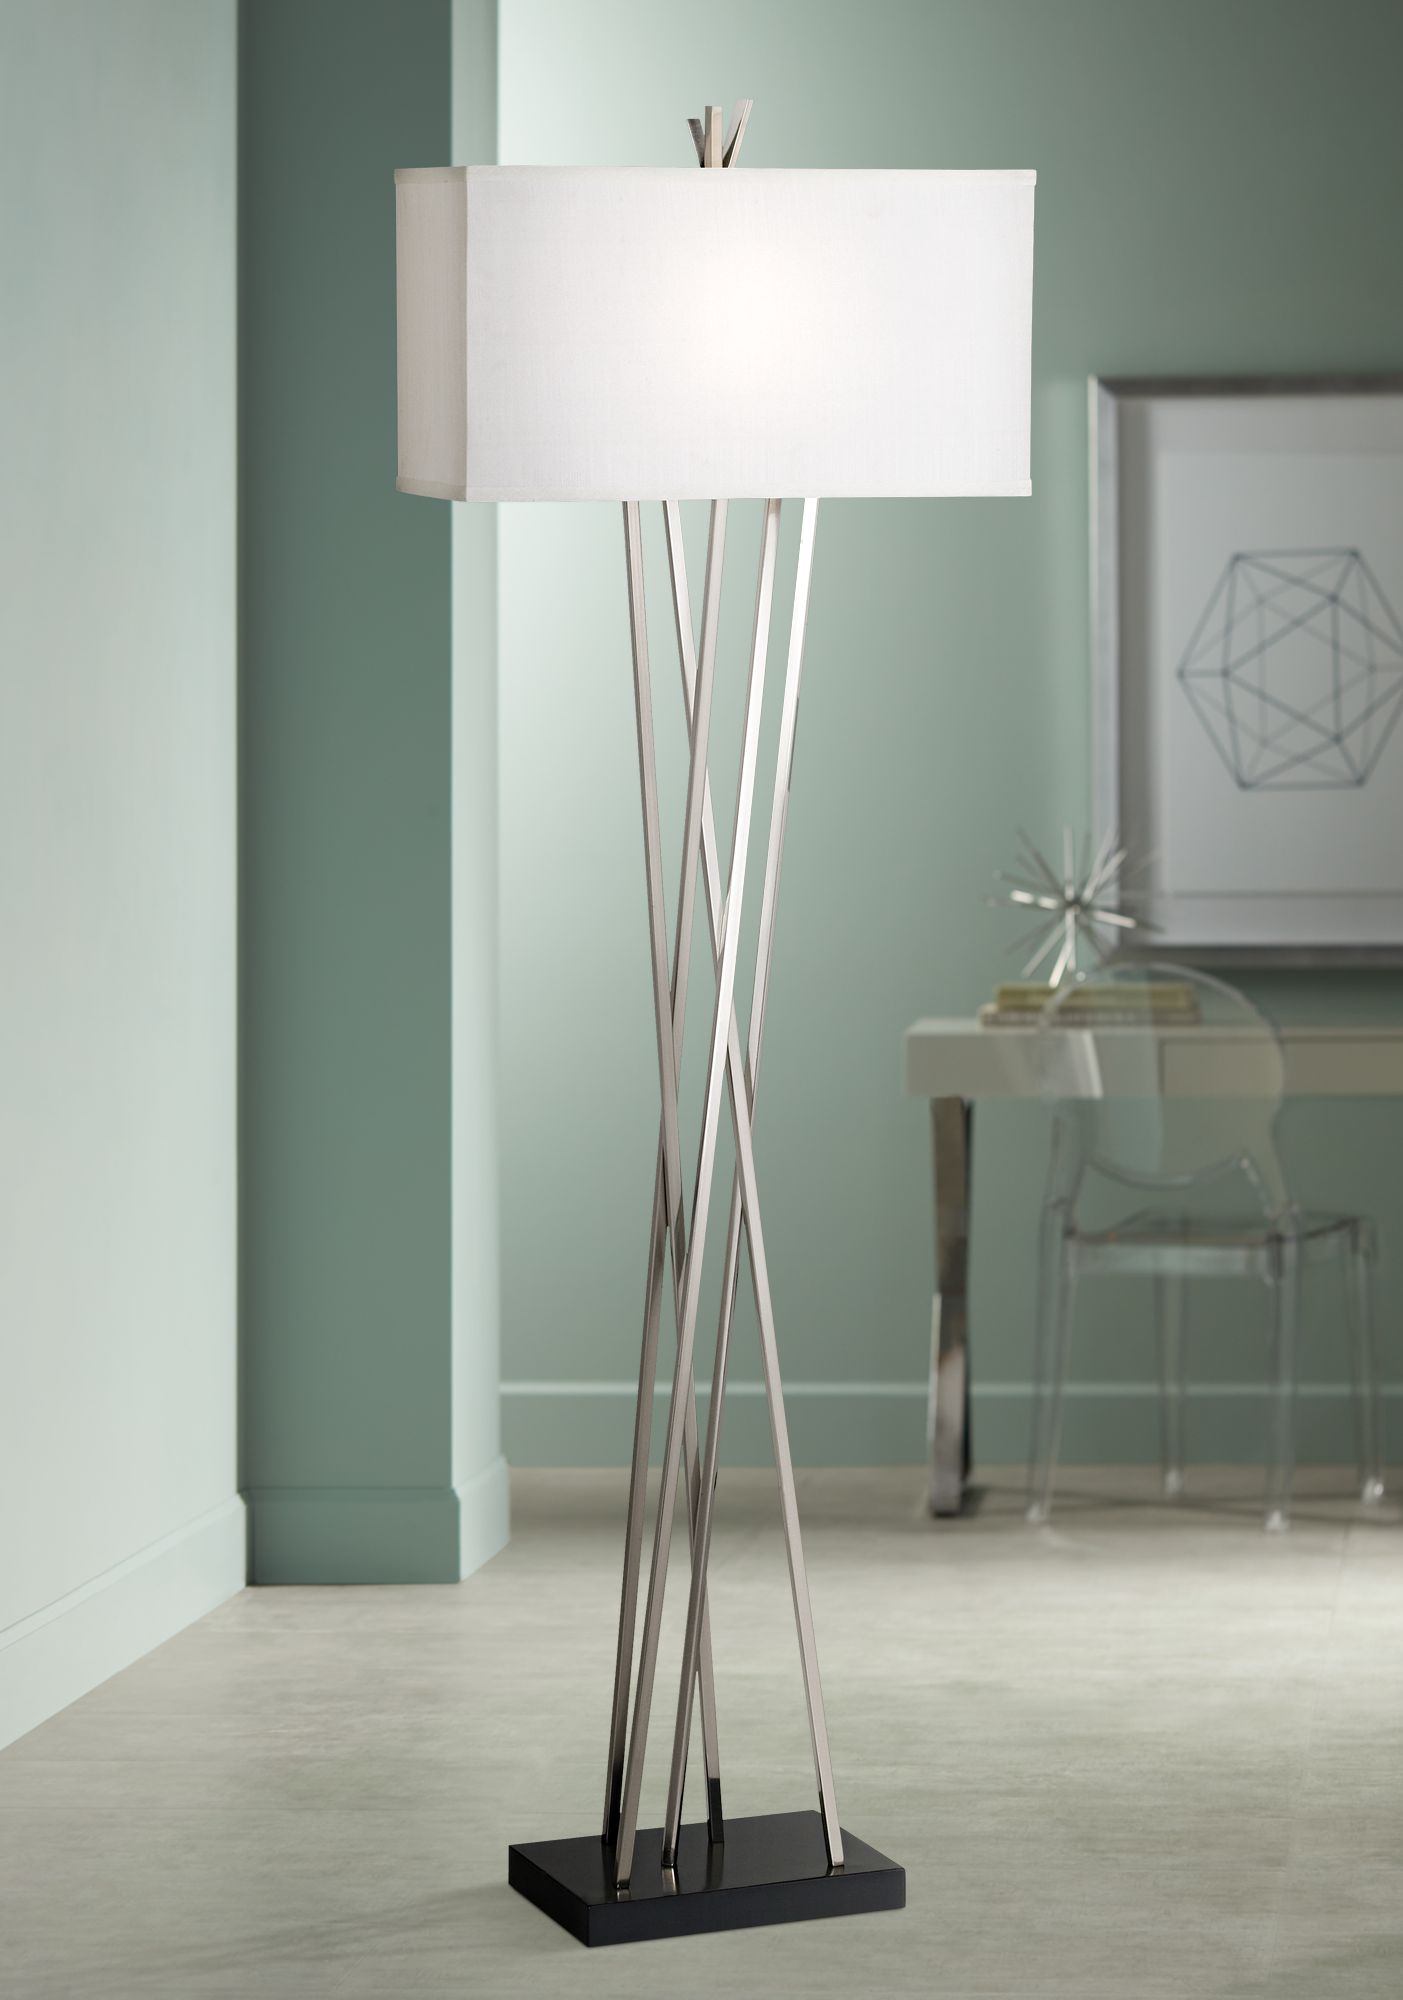 cool modern floor lamps Possini Euro Design Asymmetry floor lamp RRMZLZJ